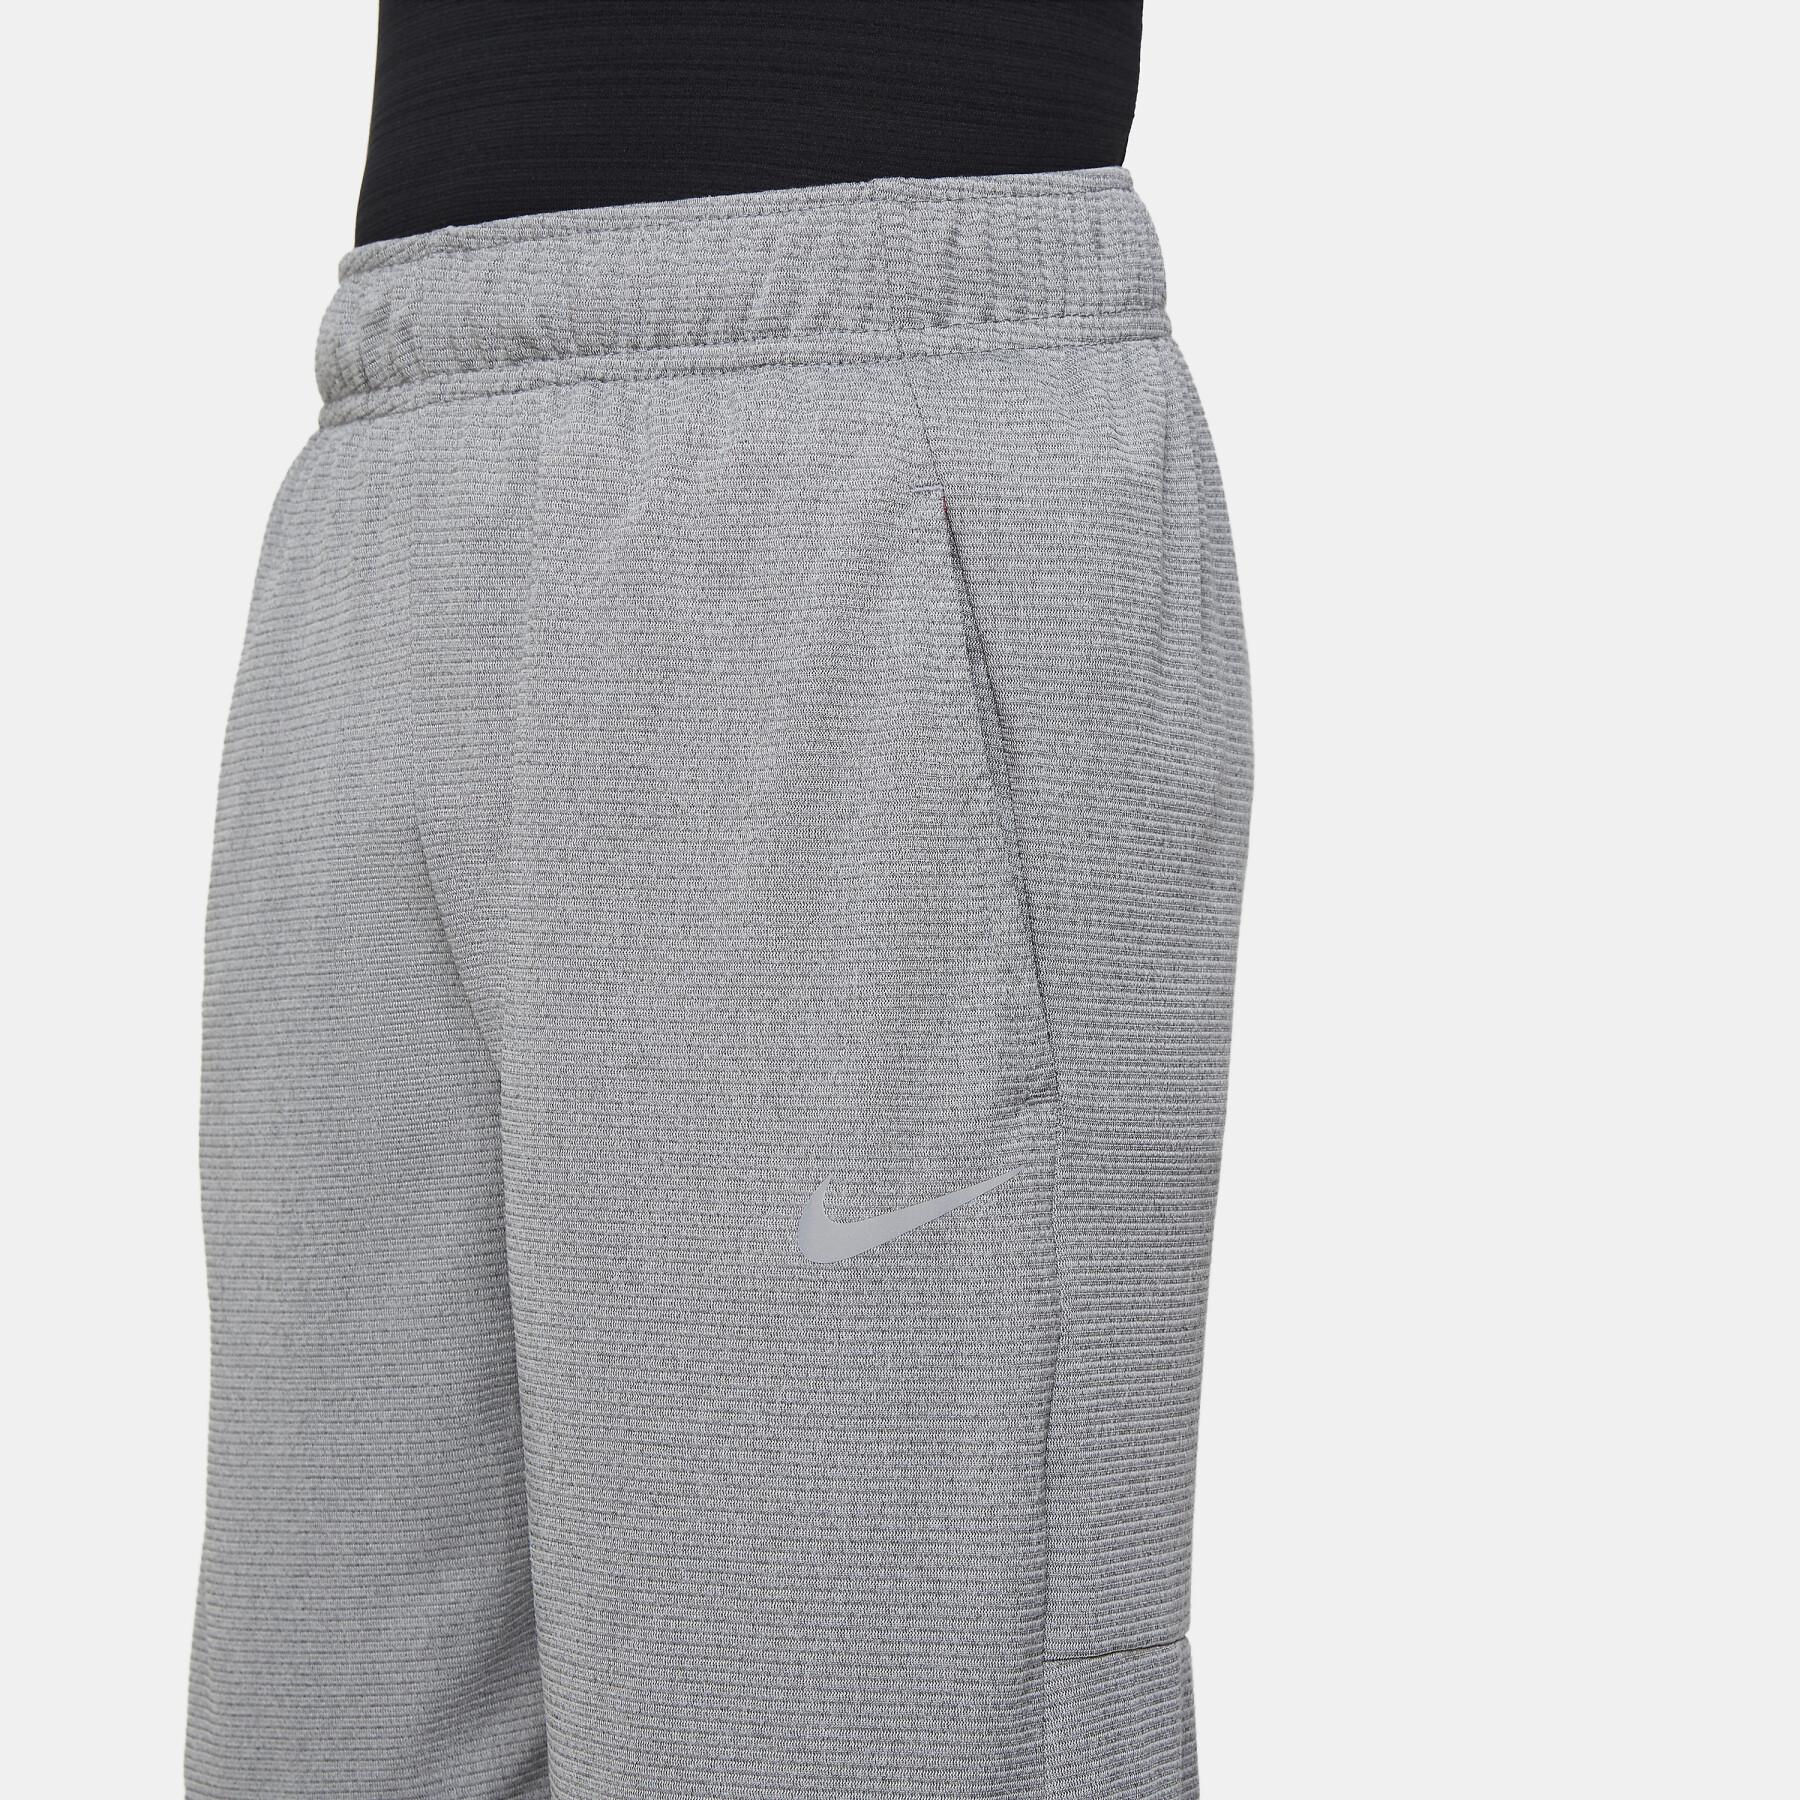 Kinder shorts Nike Poly +